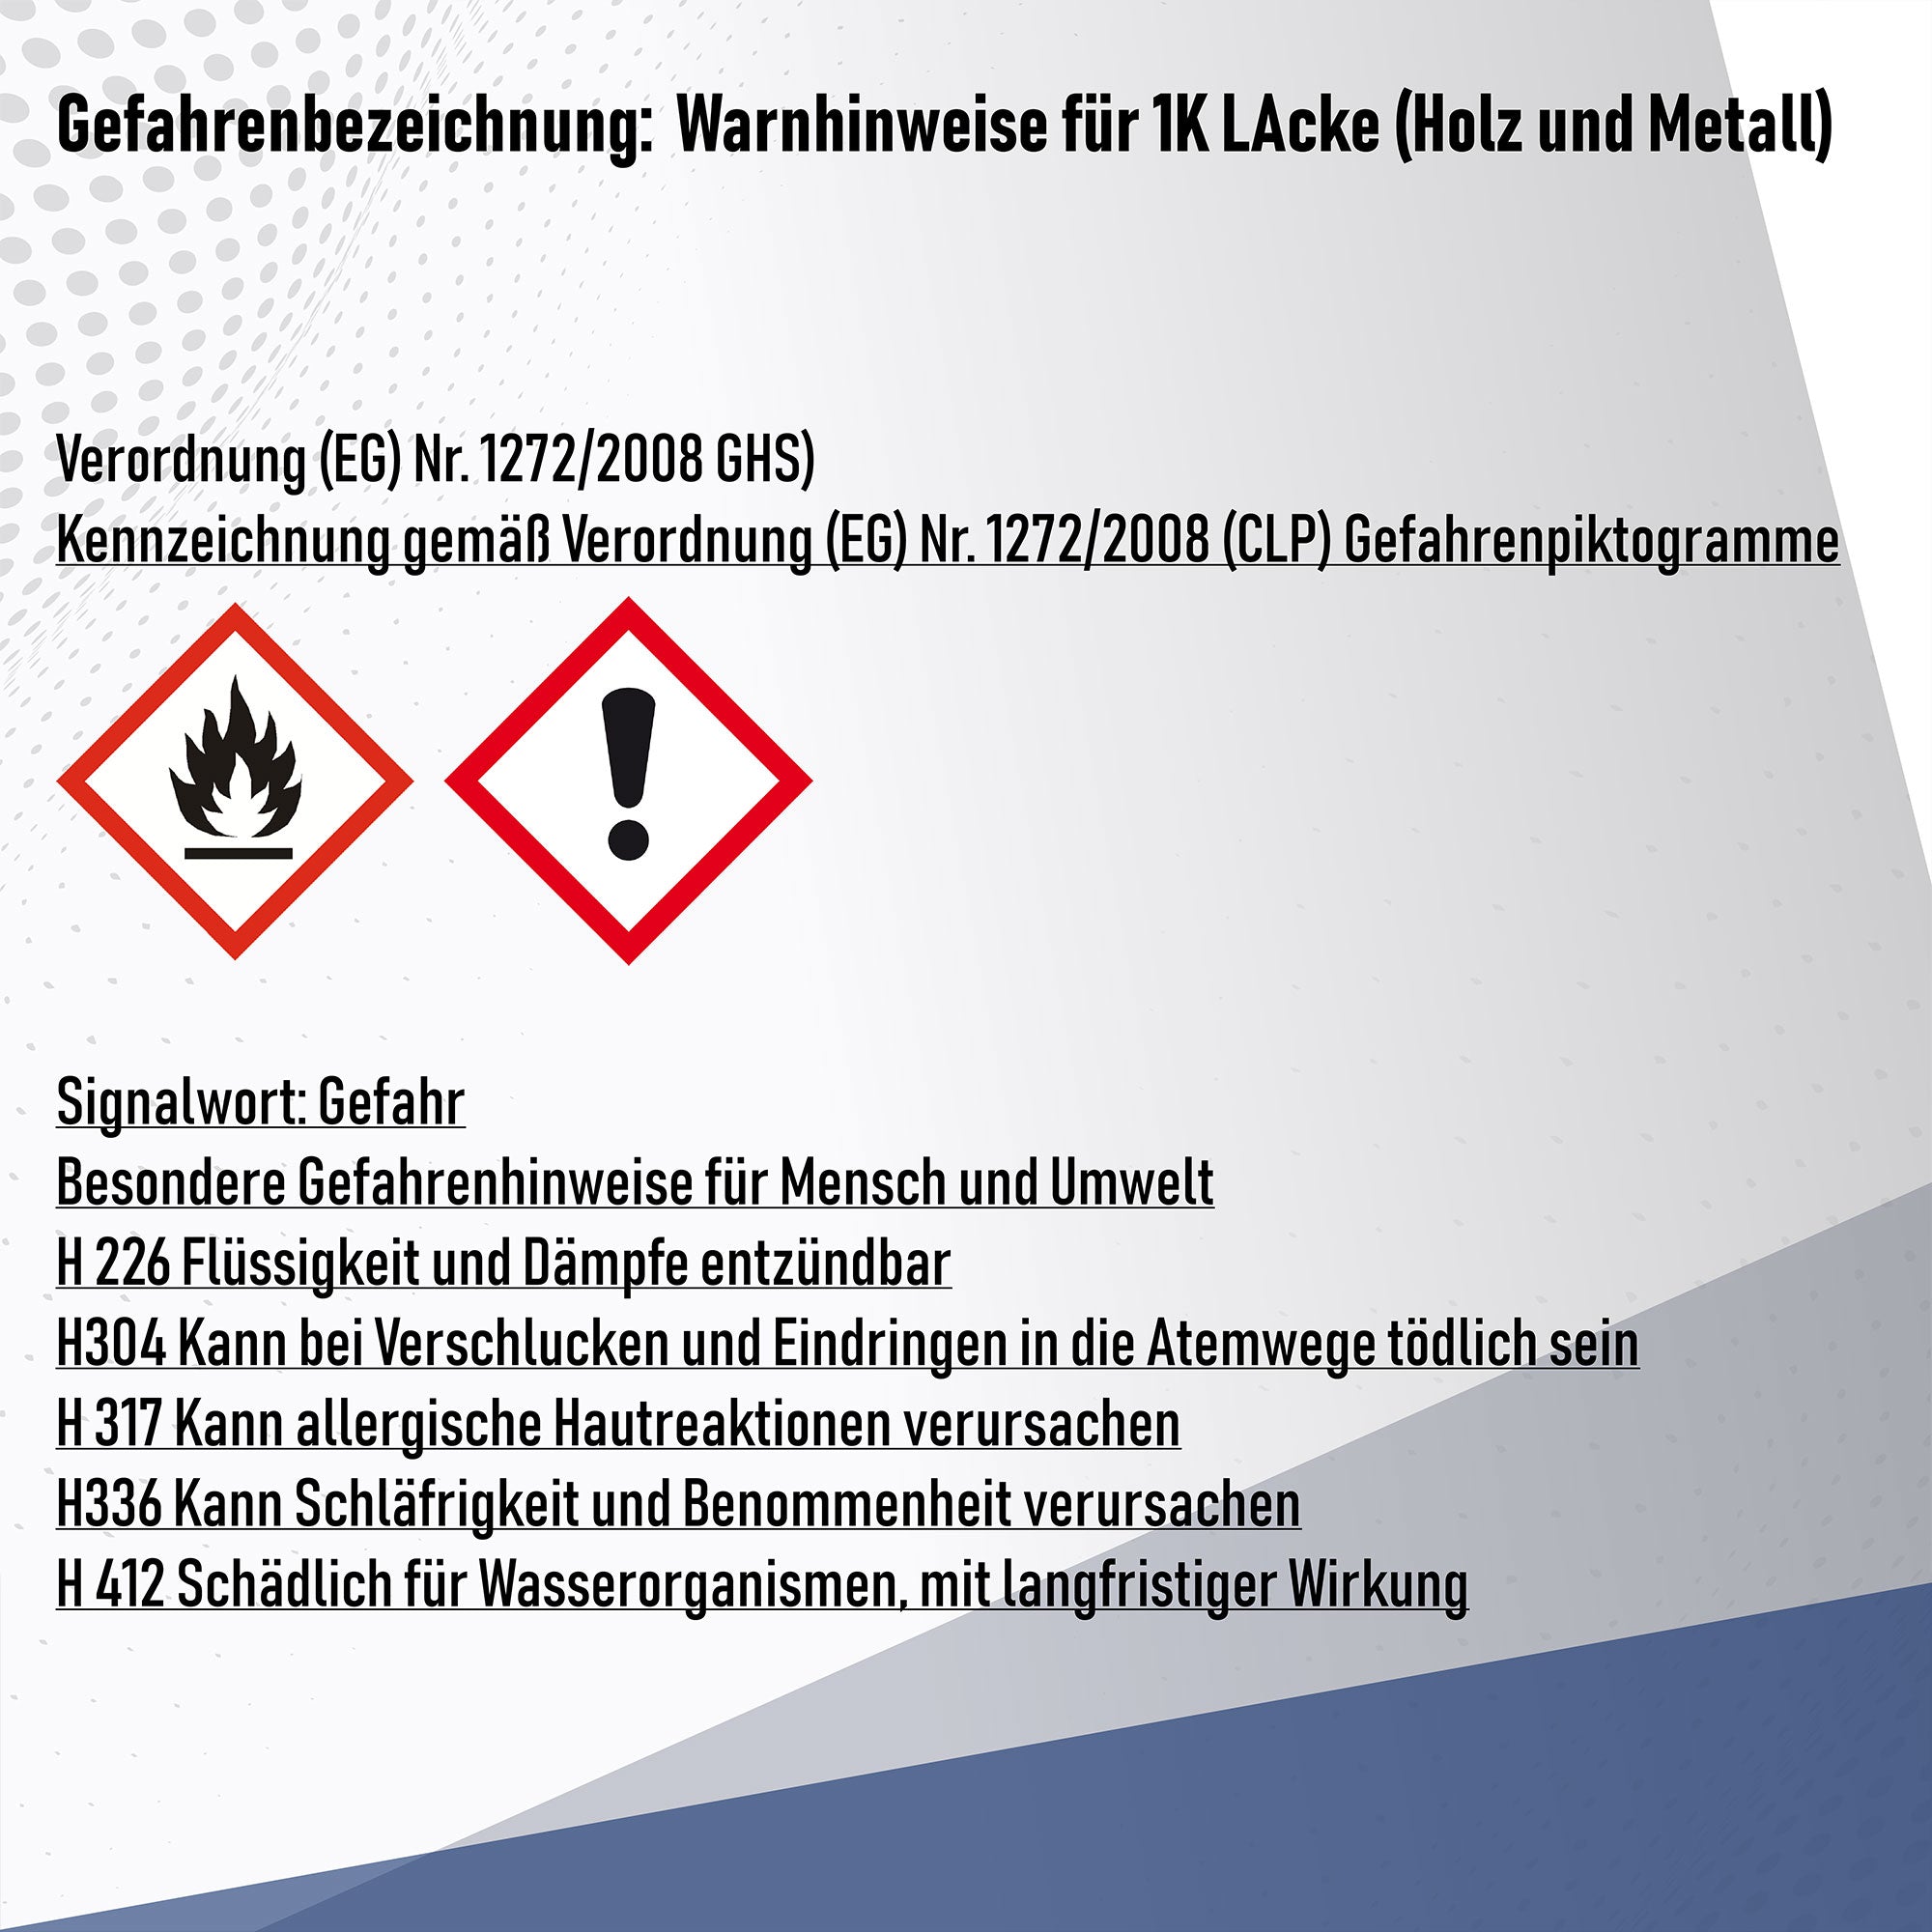 Hamburger Lack-Profi Buntlack in Patinagrün RAL 6000 mit Lackierset (X300) & Verdünnung (1 L) - 30% Sparangebot